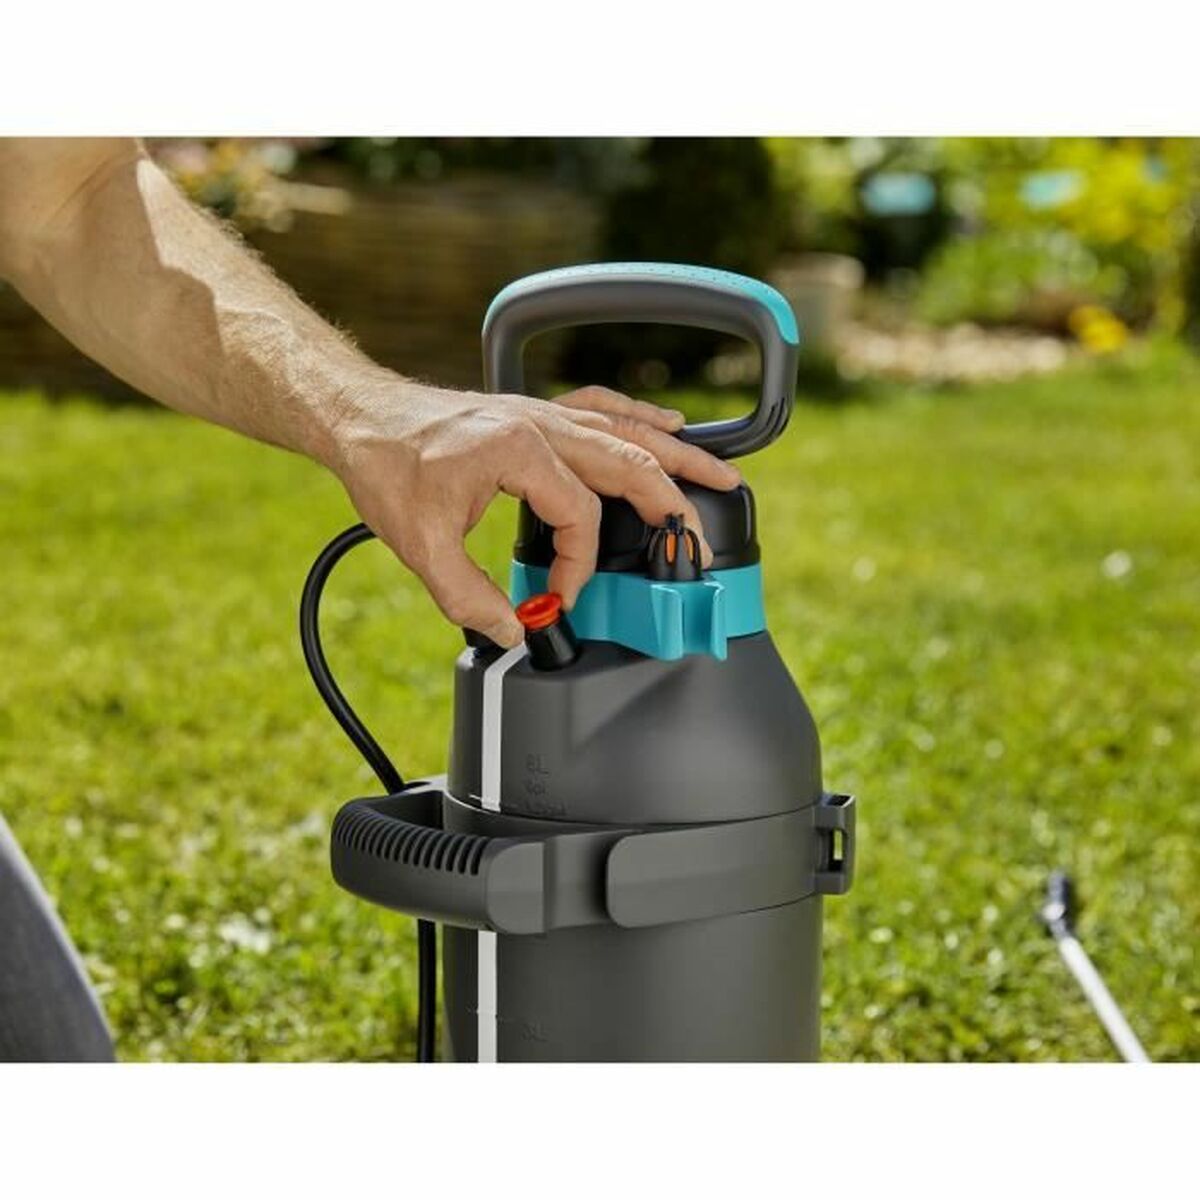 Knapsack sprayer Gardena 11138-20 3 BAR 5 L